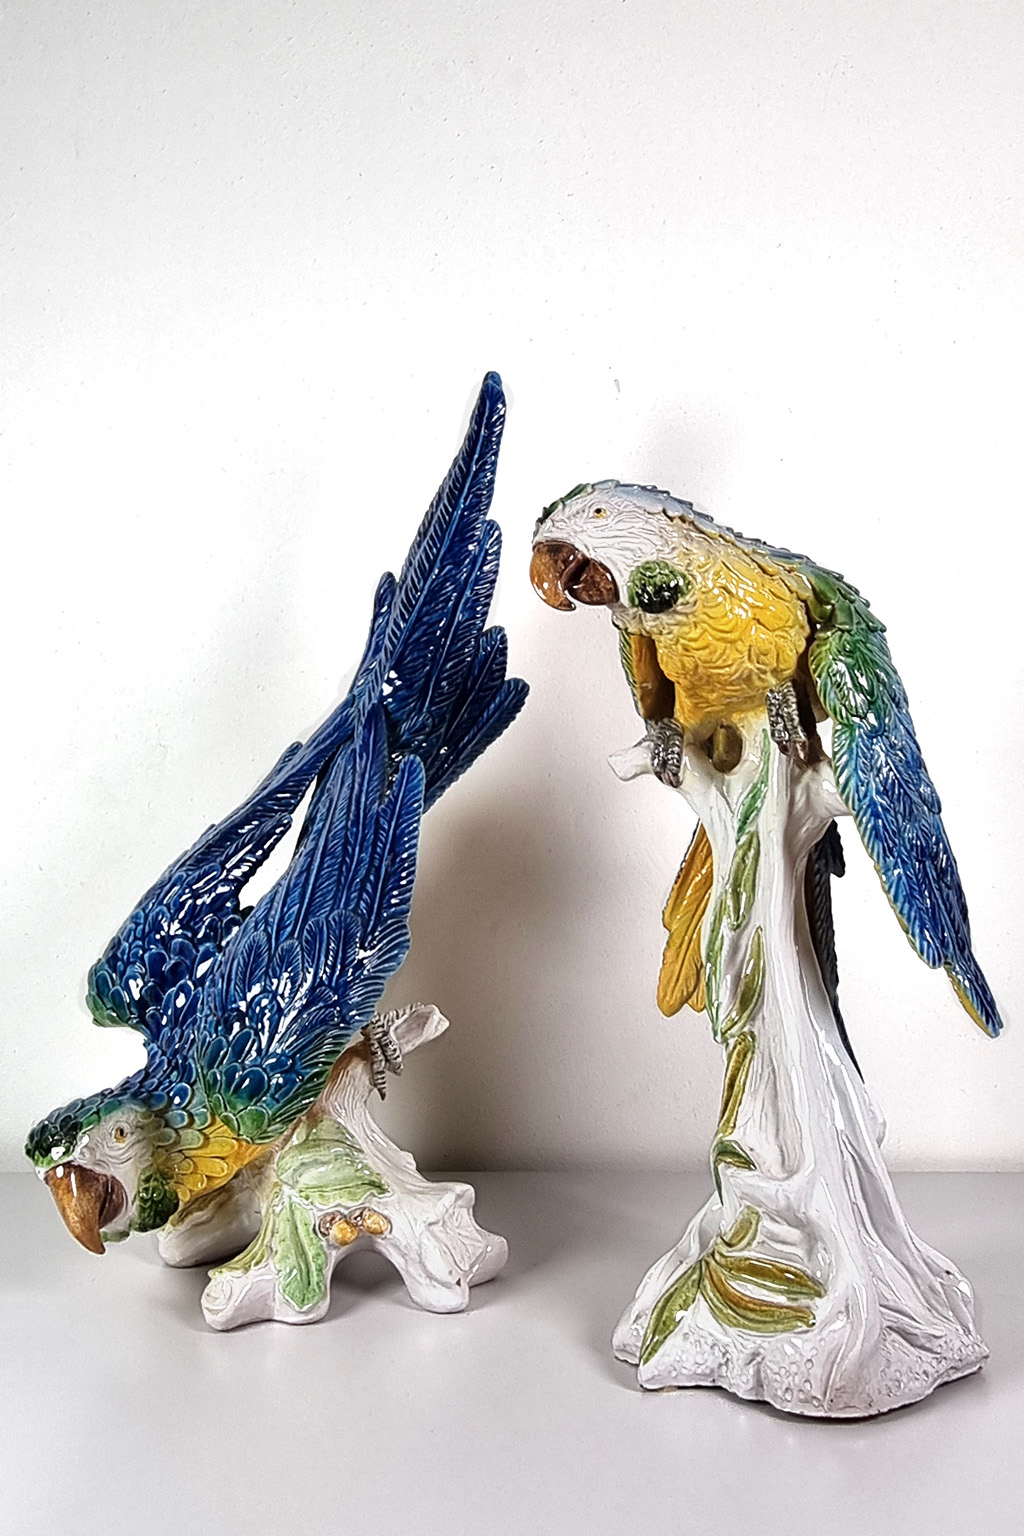 Pair of ceramic macaws